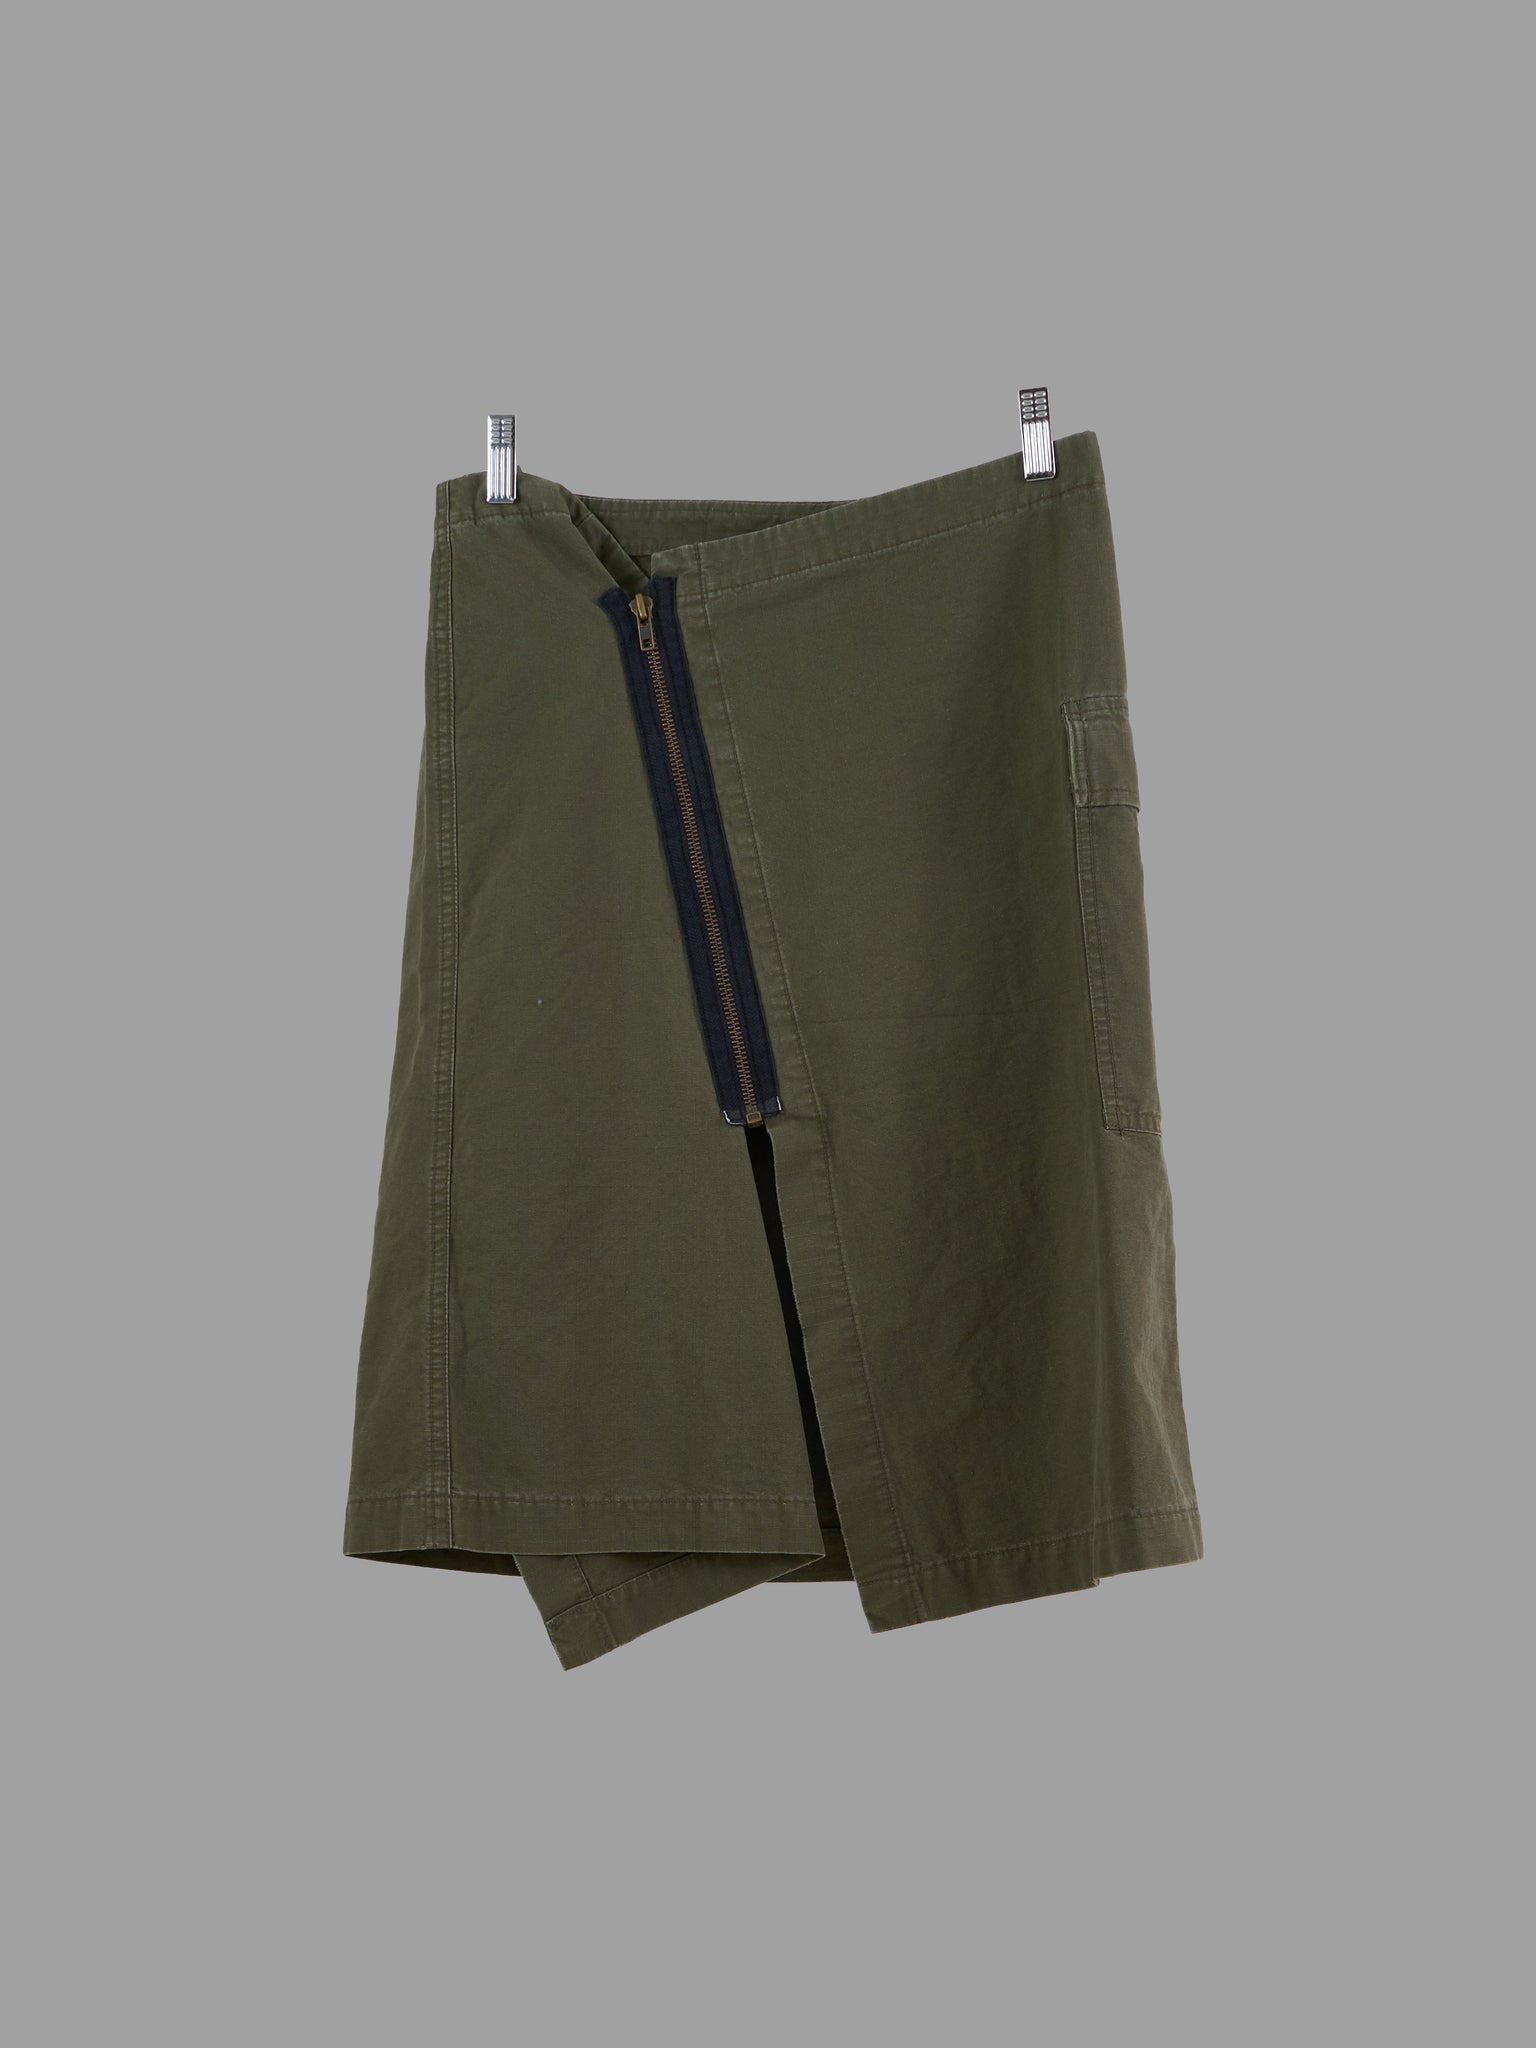 Tricot Comme des Garcons 2002 khaki ripstop cotton exposed zip cargo skirt - M